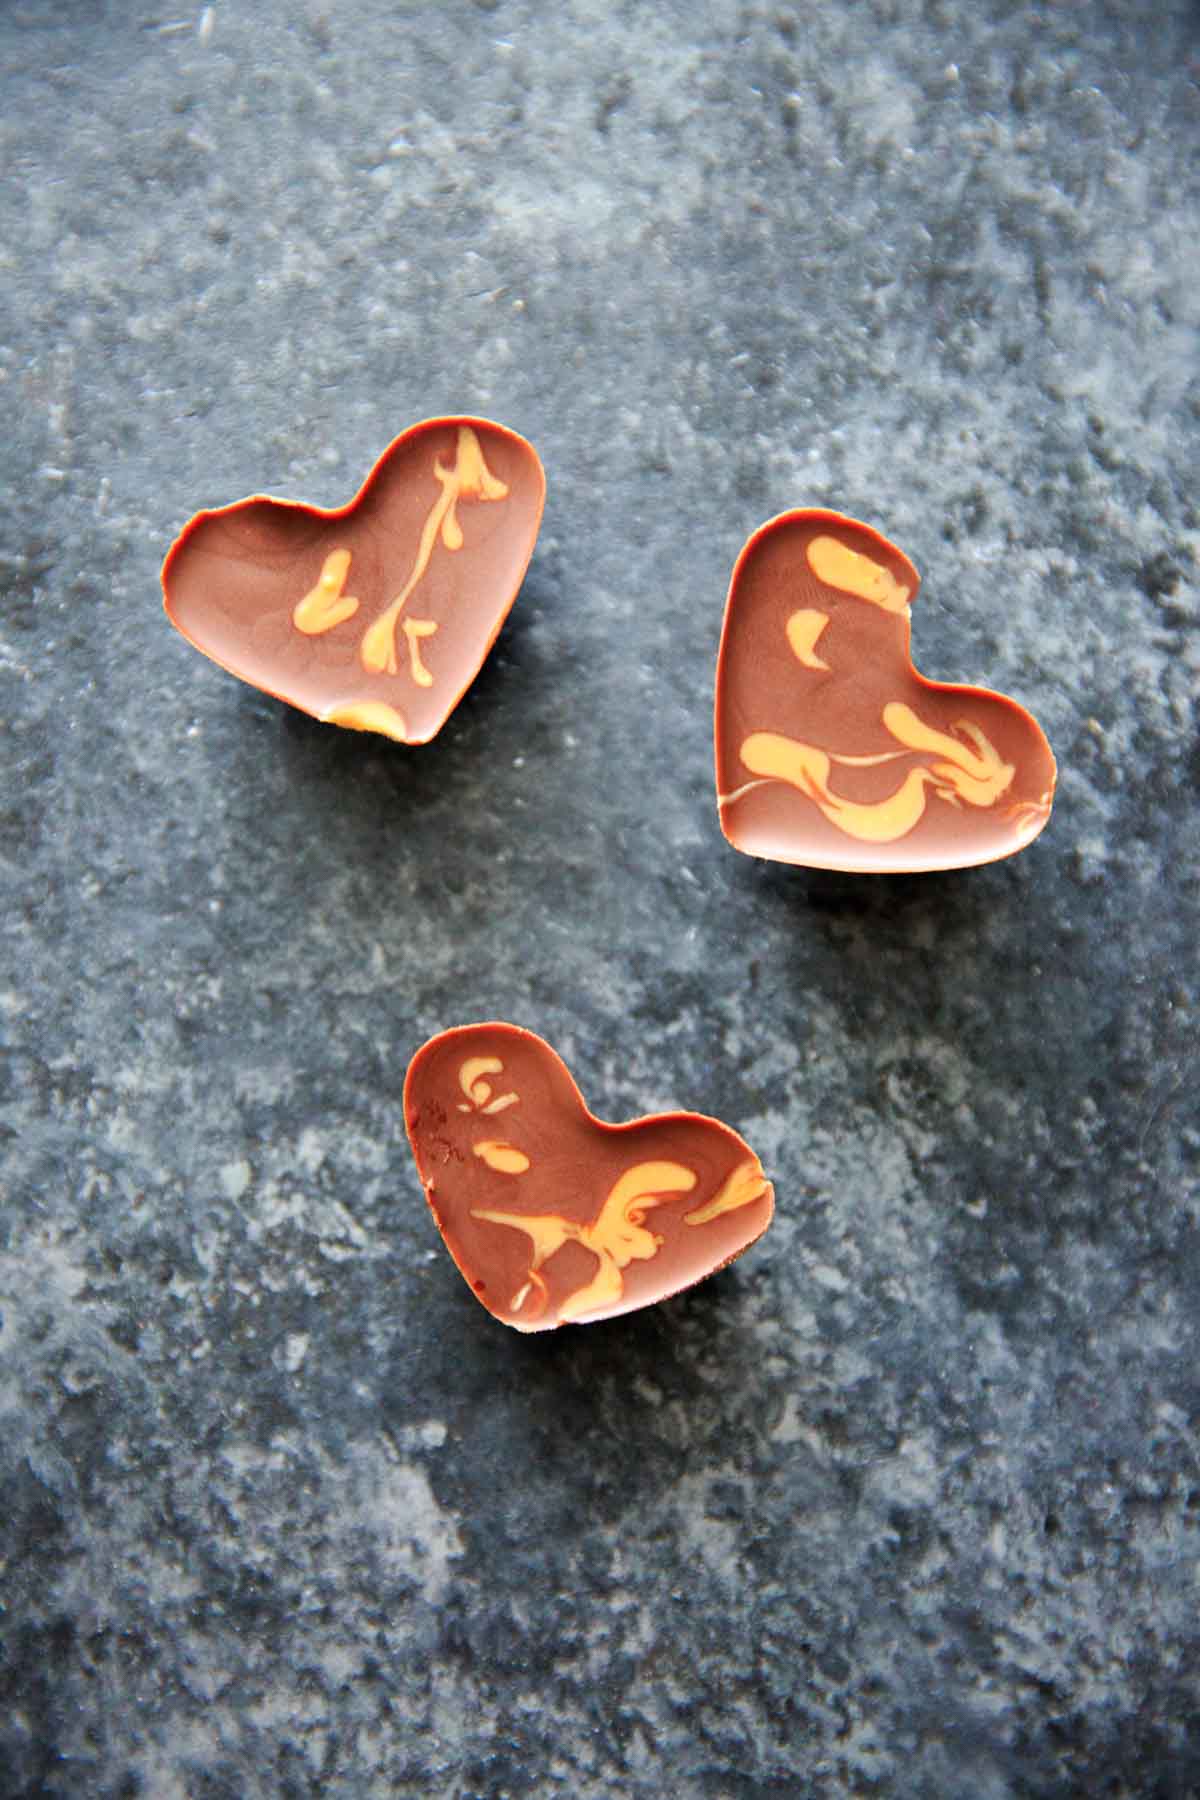 Chocolate Pomegranate Candy Recipe - chocolate peanut butter heart shaped bites